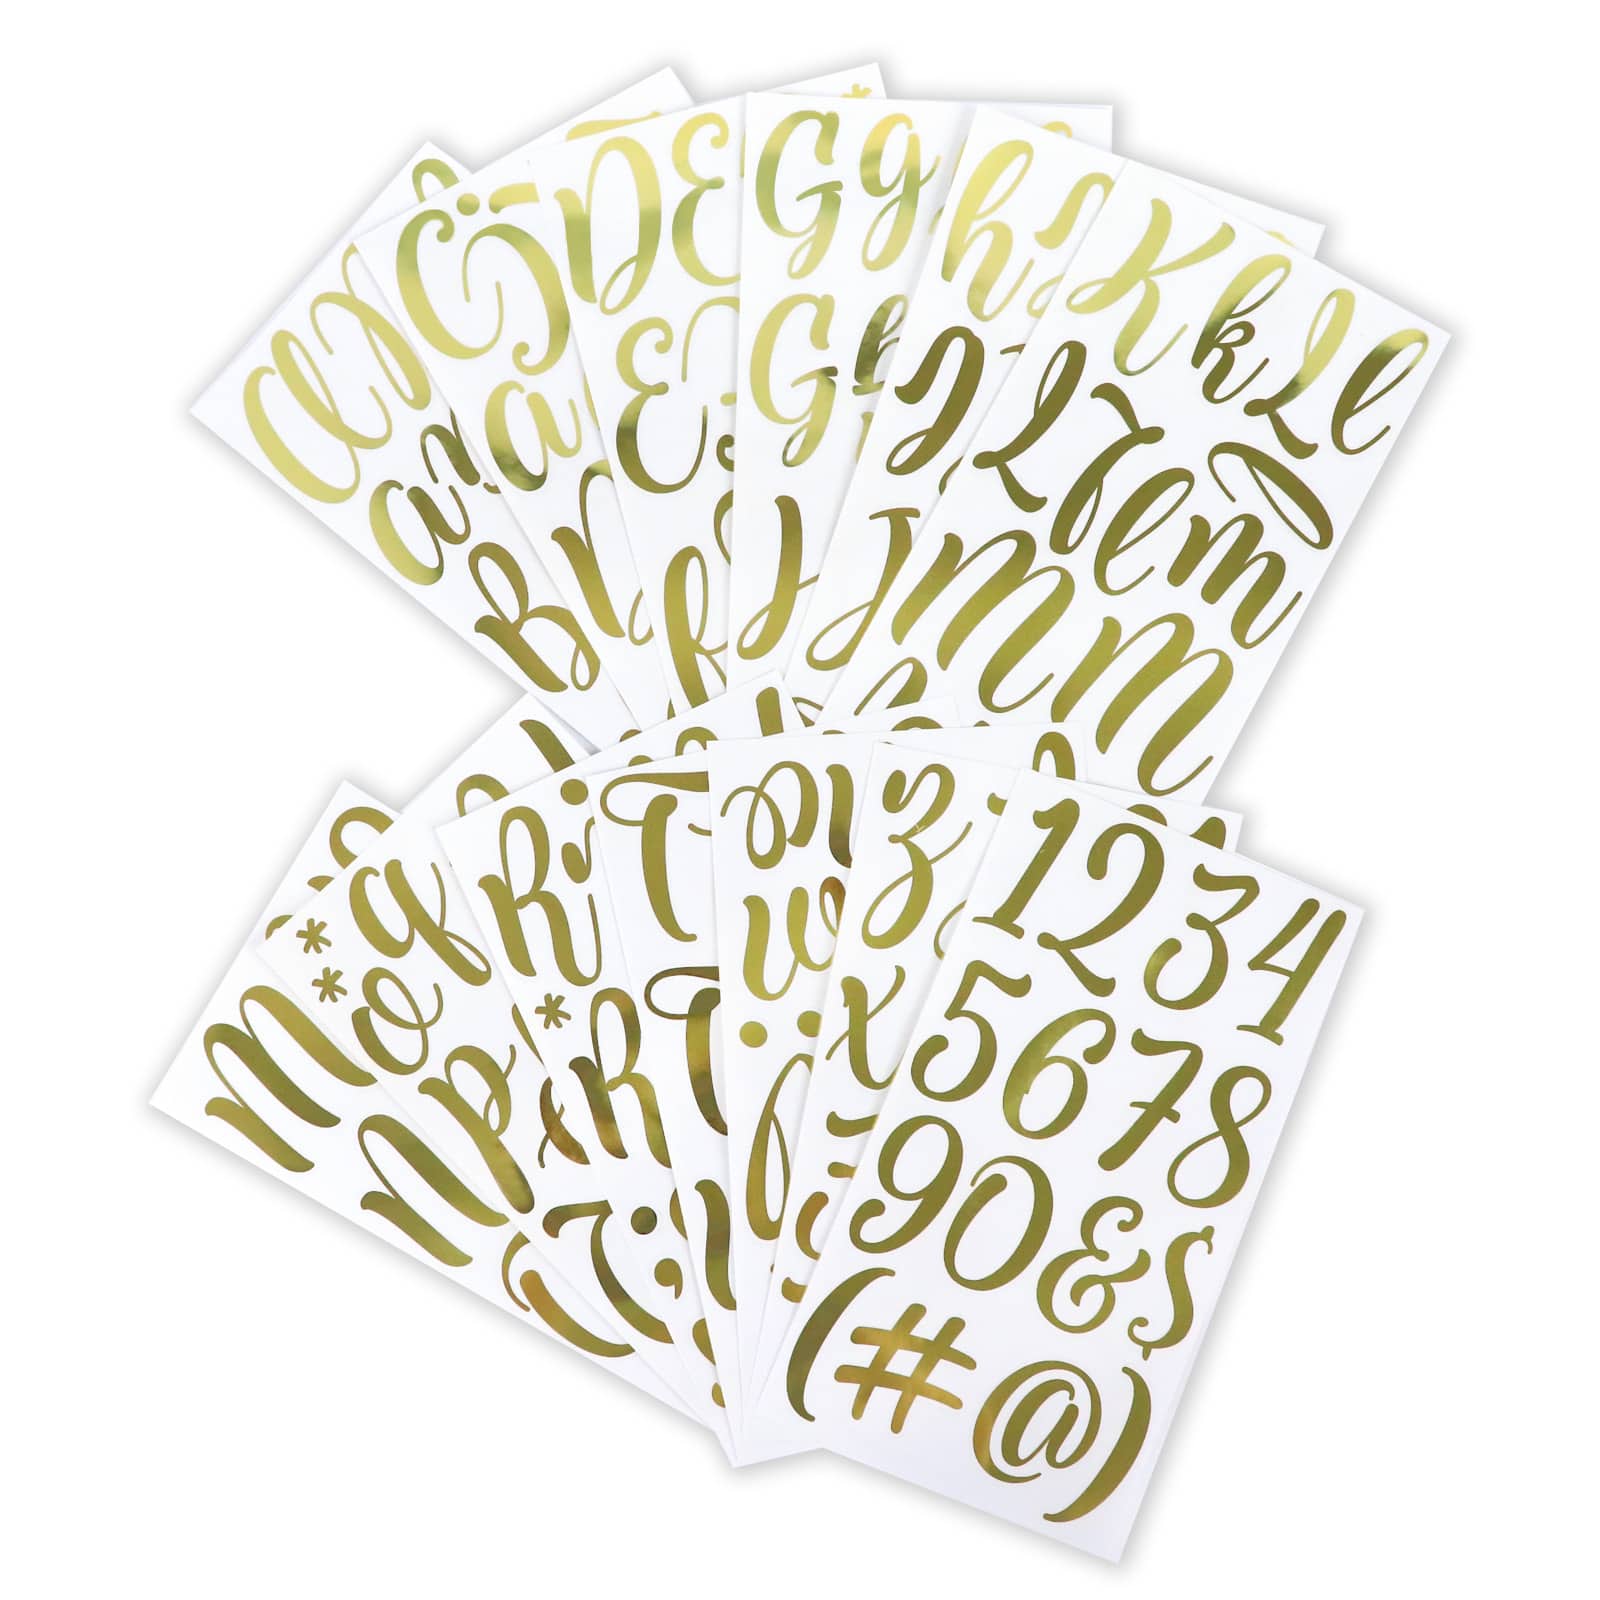 1 Sheet Golden Lowercase Letters Sticker- Alphabet Sticker Self